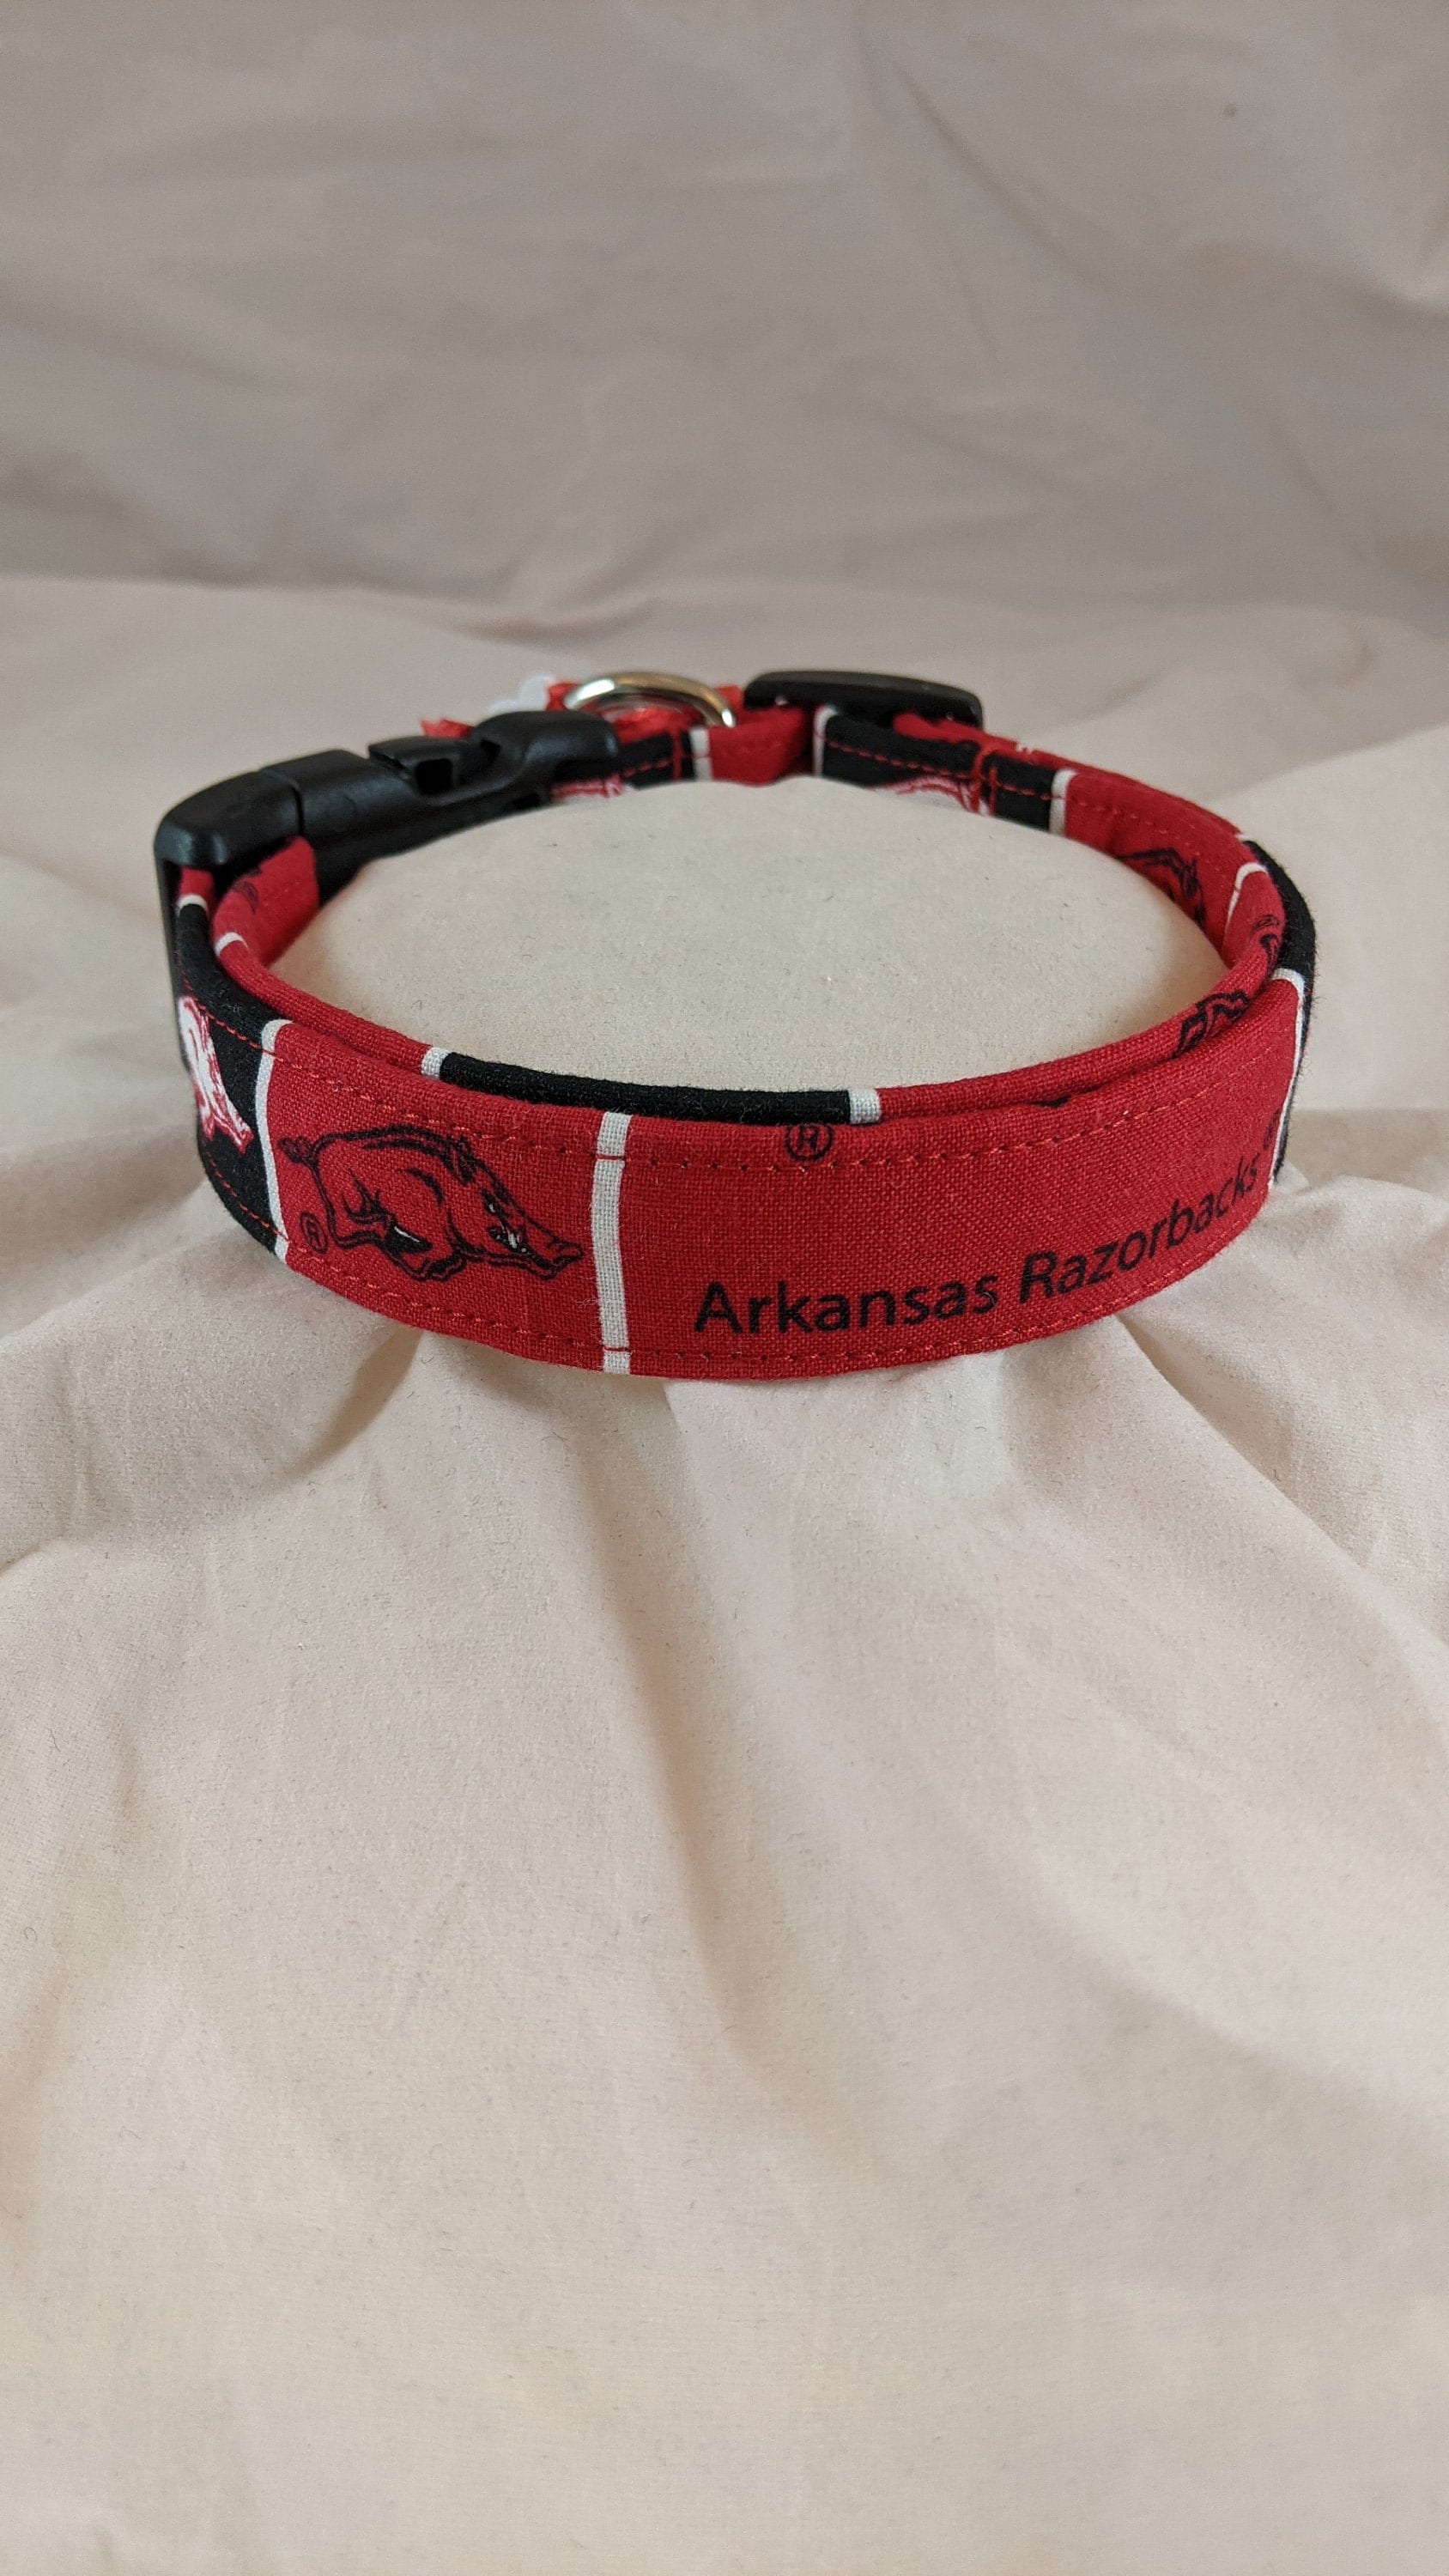 Arkansas Razorbacks Pet Reflective Nylon Collar - Small